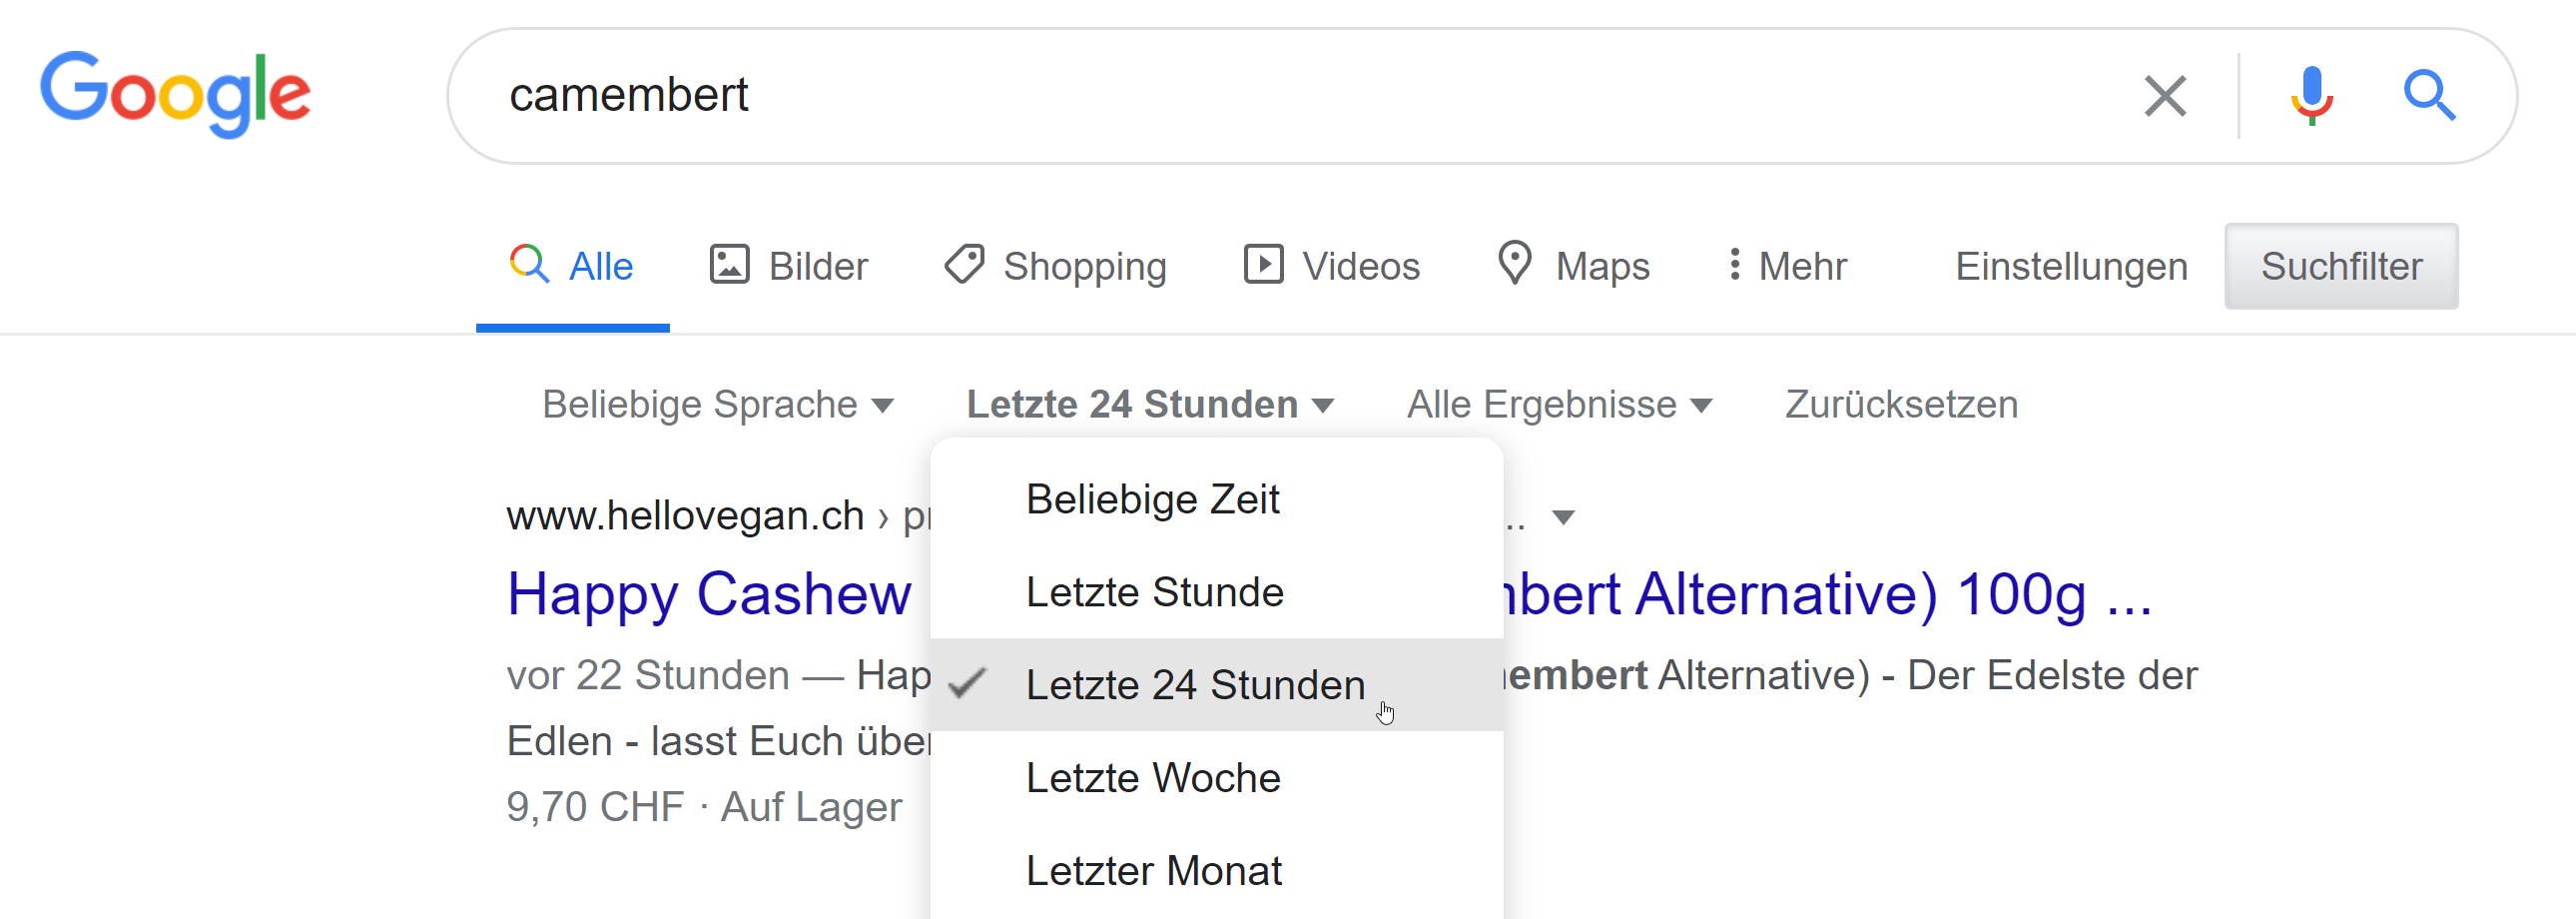 Google-Suchfilter Datum